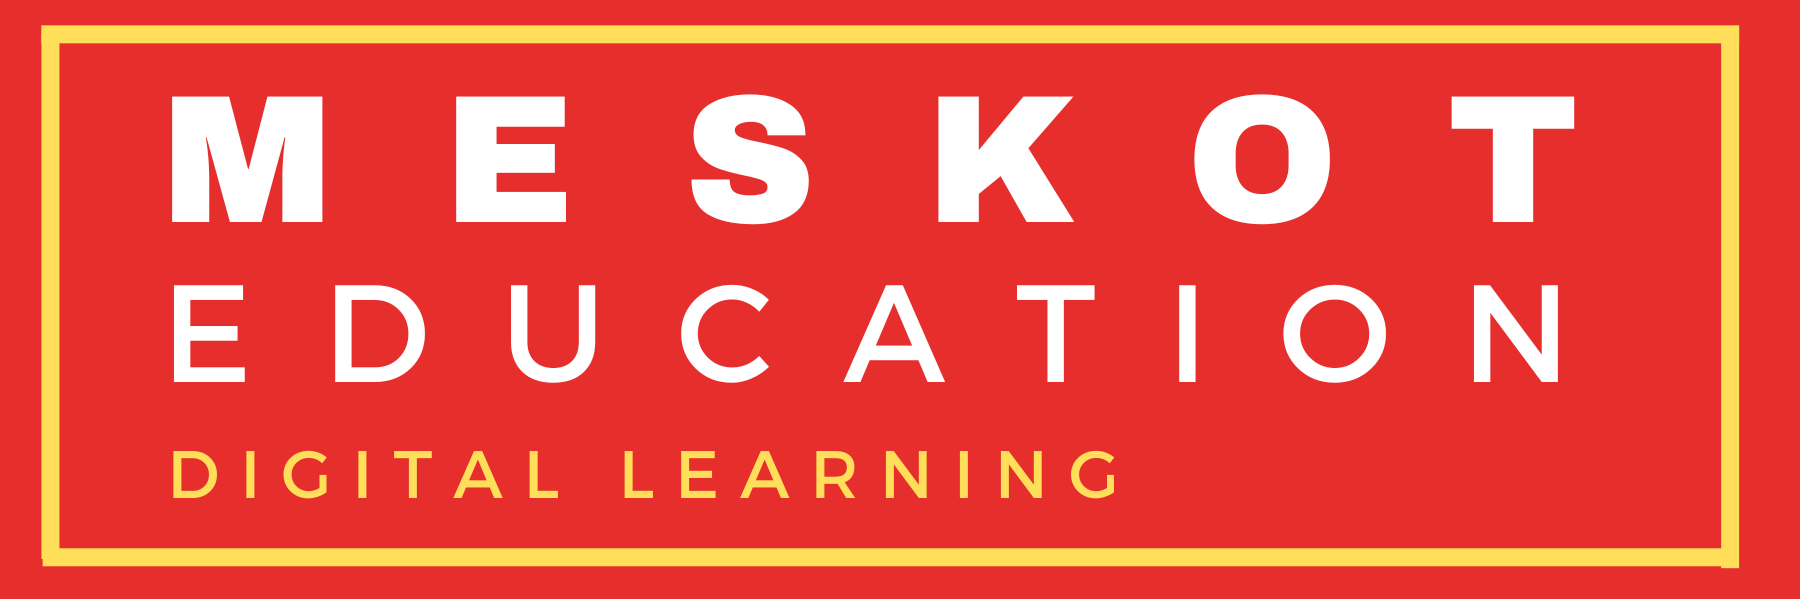 Meskot education Logo